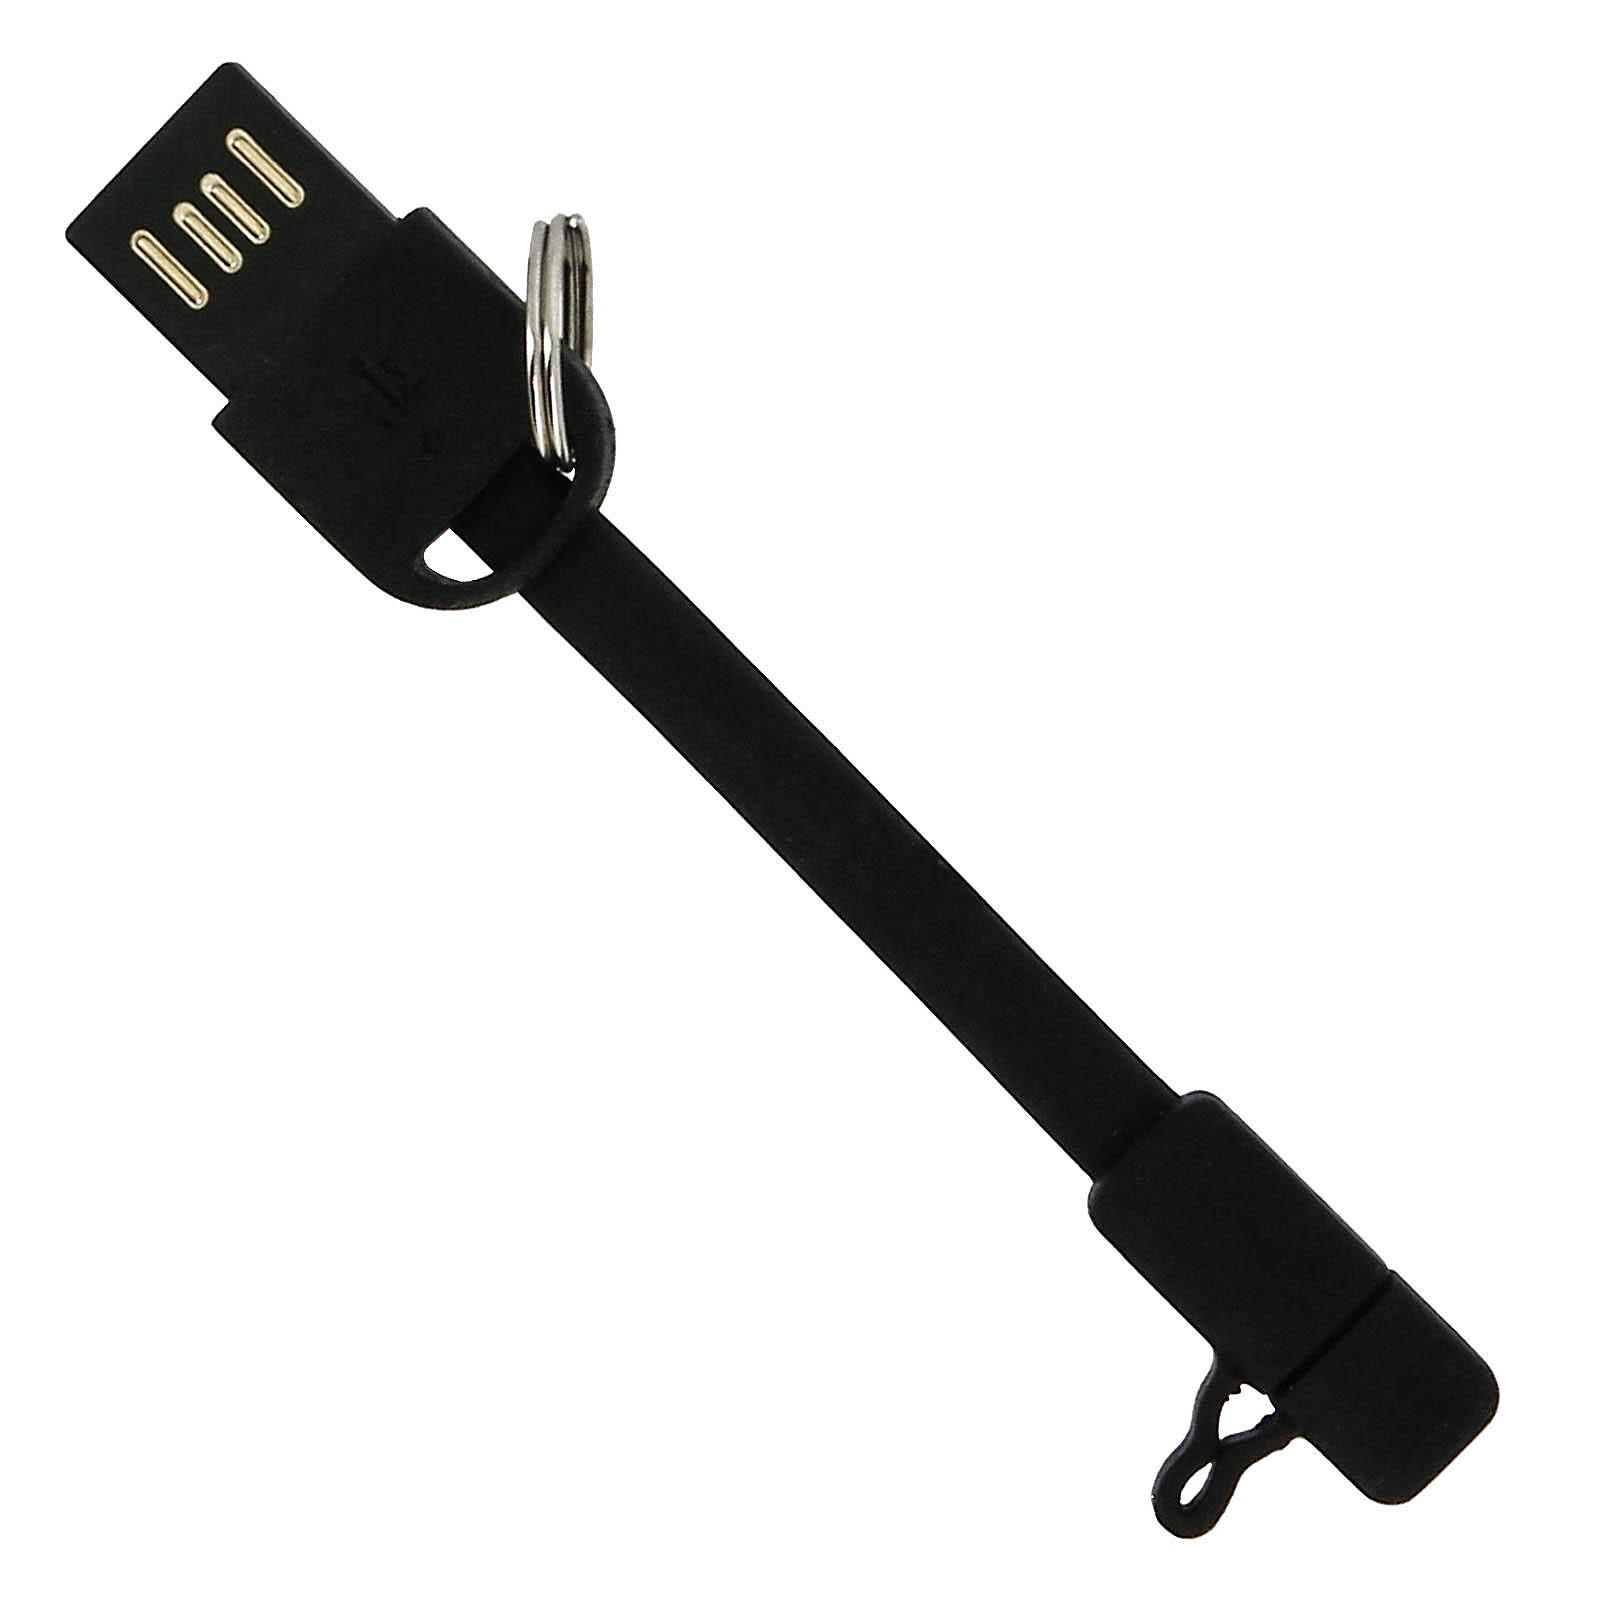 Chargeur allume-cigare USB + câble Micro USB - Moxie